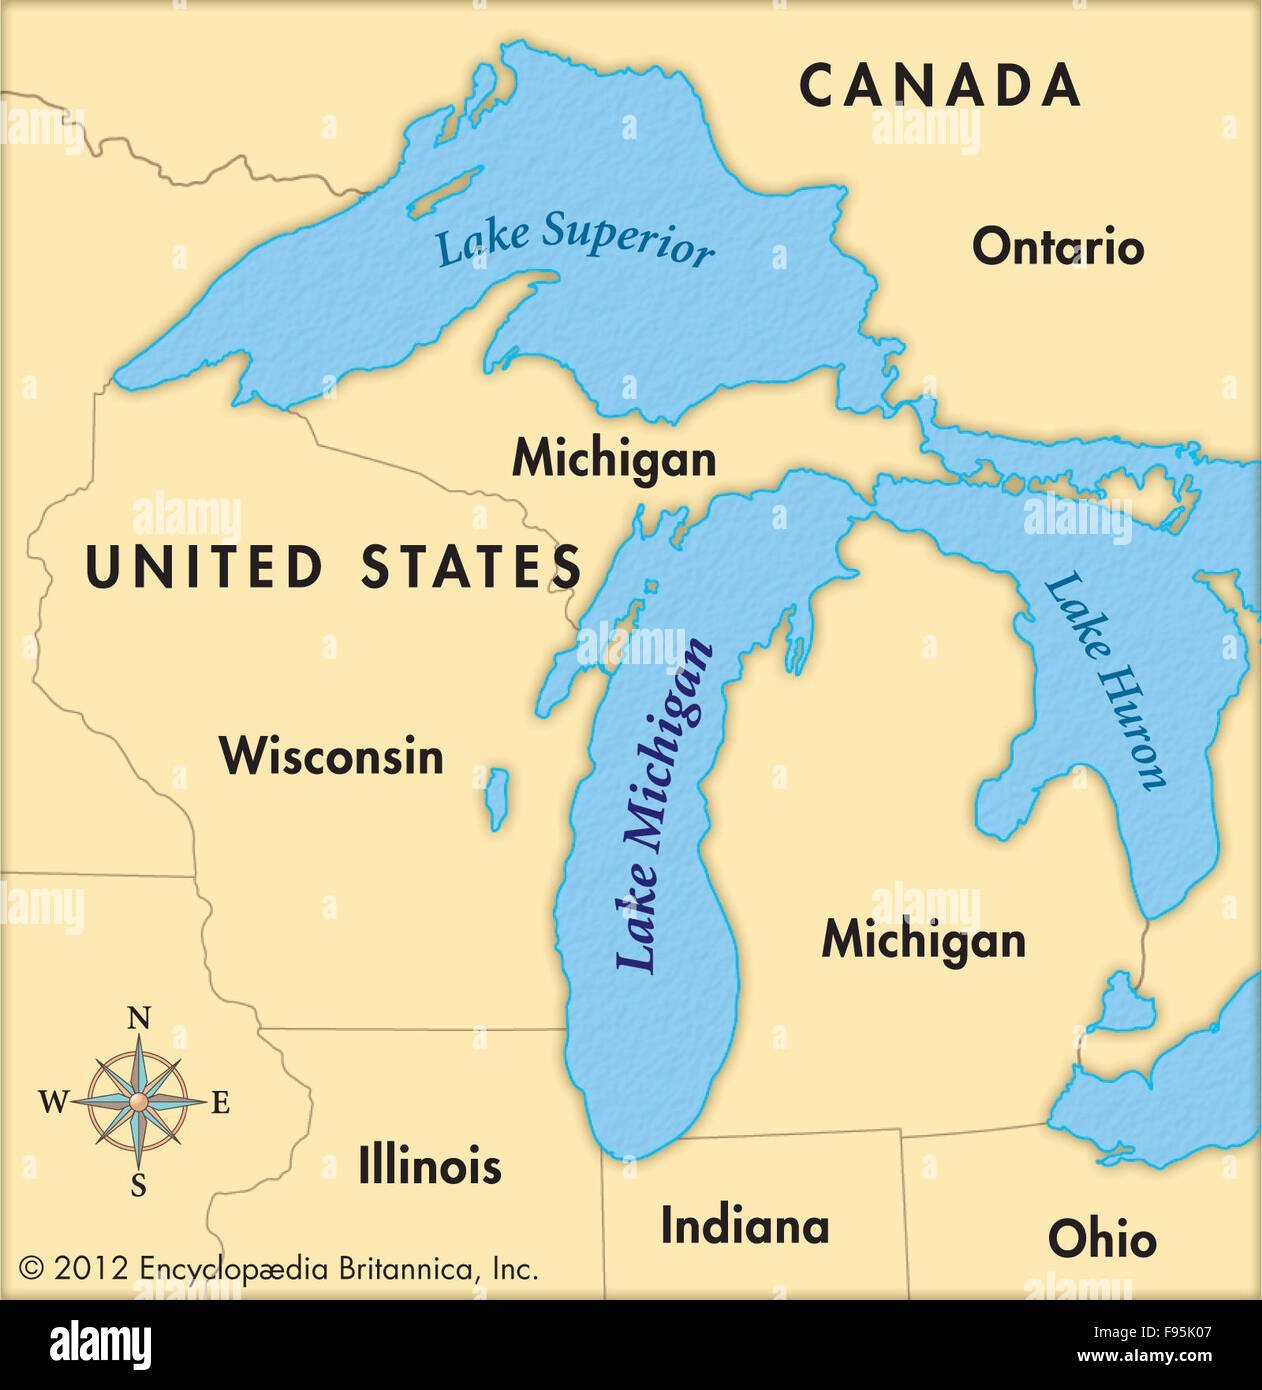 Озеро гурон материк. Великие озера Северной Америки Мичиган. Озера верхнее Мичиган Гурон Эри Онтарио на карте Северной Америки. На контурной карте Великие озера Верхние Мичиган Гурон Эри Онтарио. Великие американские озёра верхнее Гурон Мичиган Эри Онтарио.